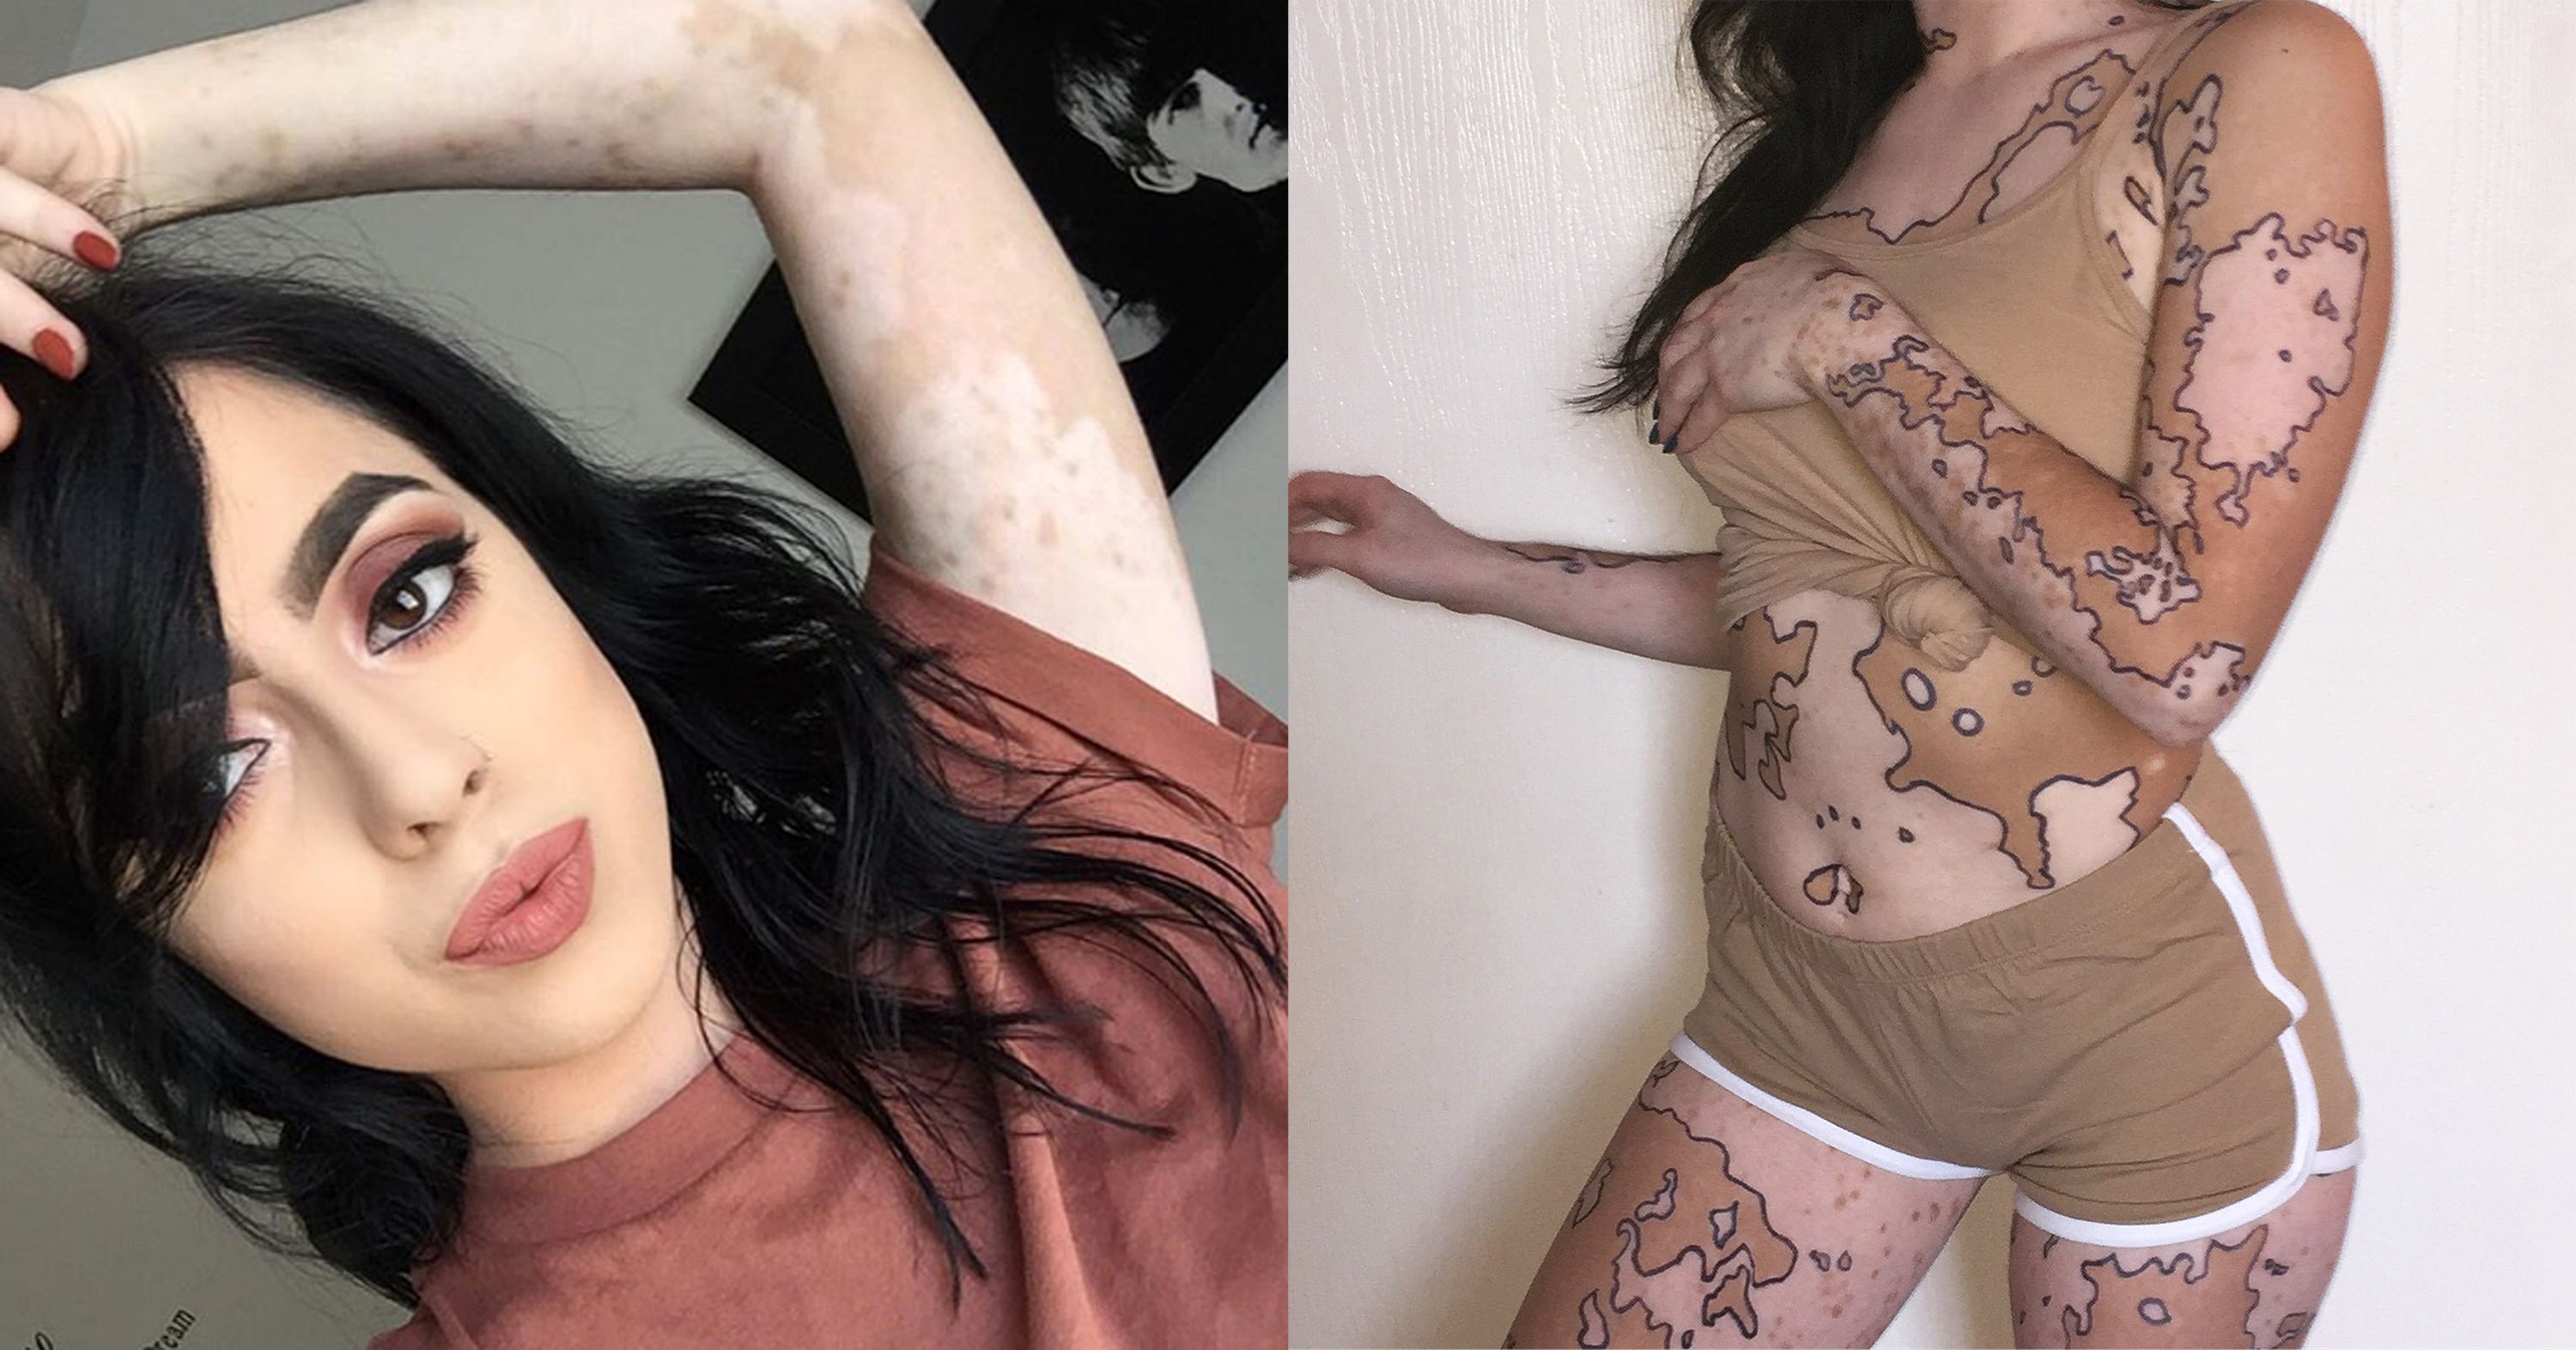 Body Acceptance. Portrait Of Happy Beautiful Lady With Vitiligo